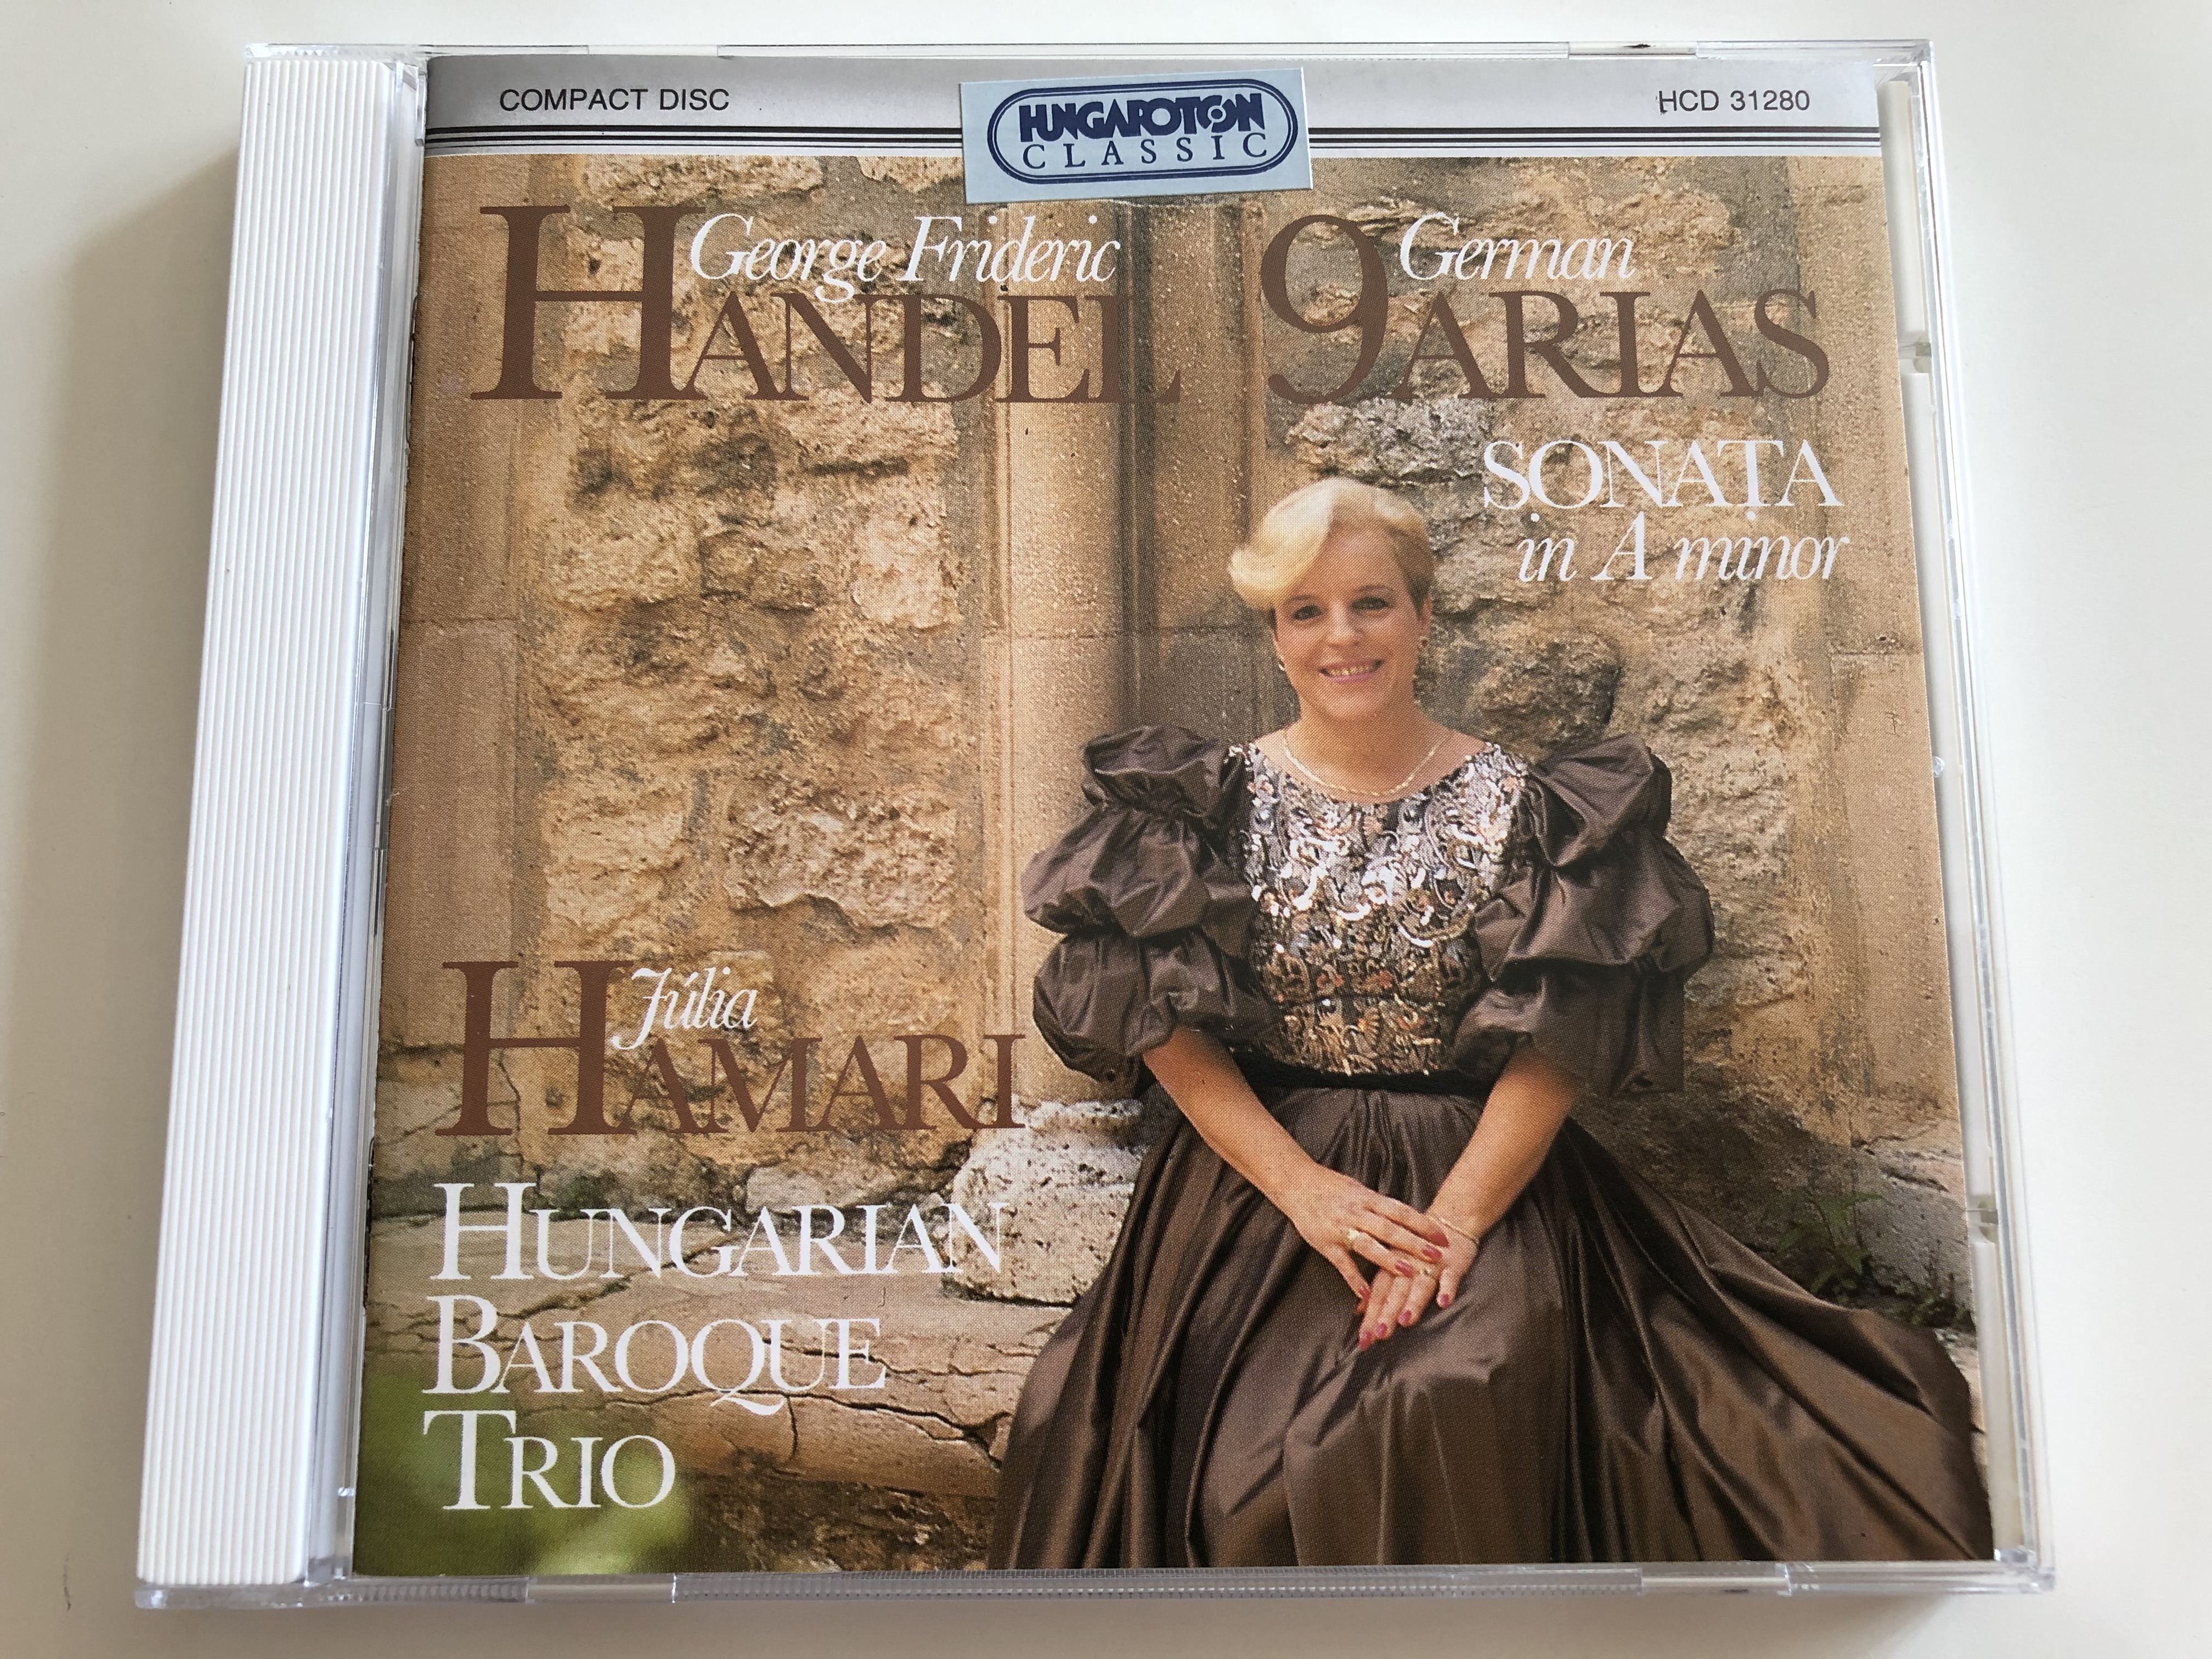 george-frideric-handel-9-german-arias-sonata-in-a-minor-j-lia-hamari-mezzo-soprano-hungarian-baroque-trio-hungaroton-classic-audio-cd-1990-hcd-31280-1-.jpg